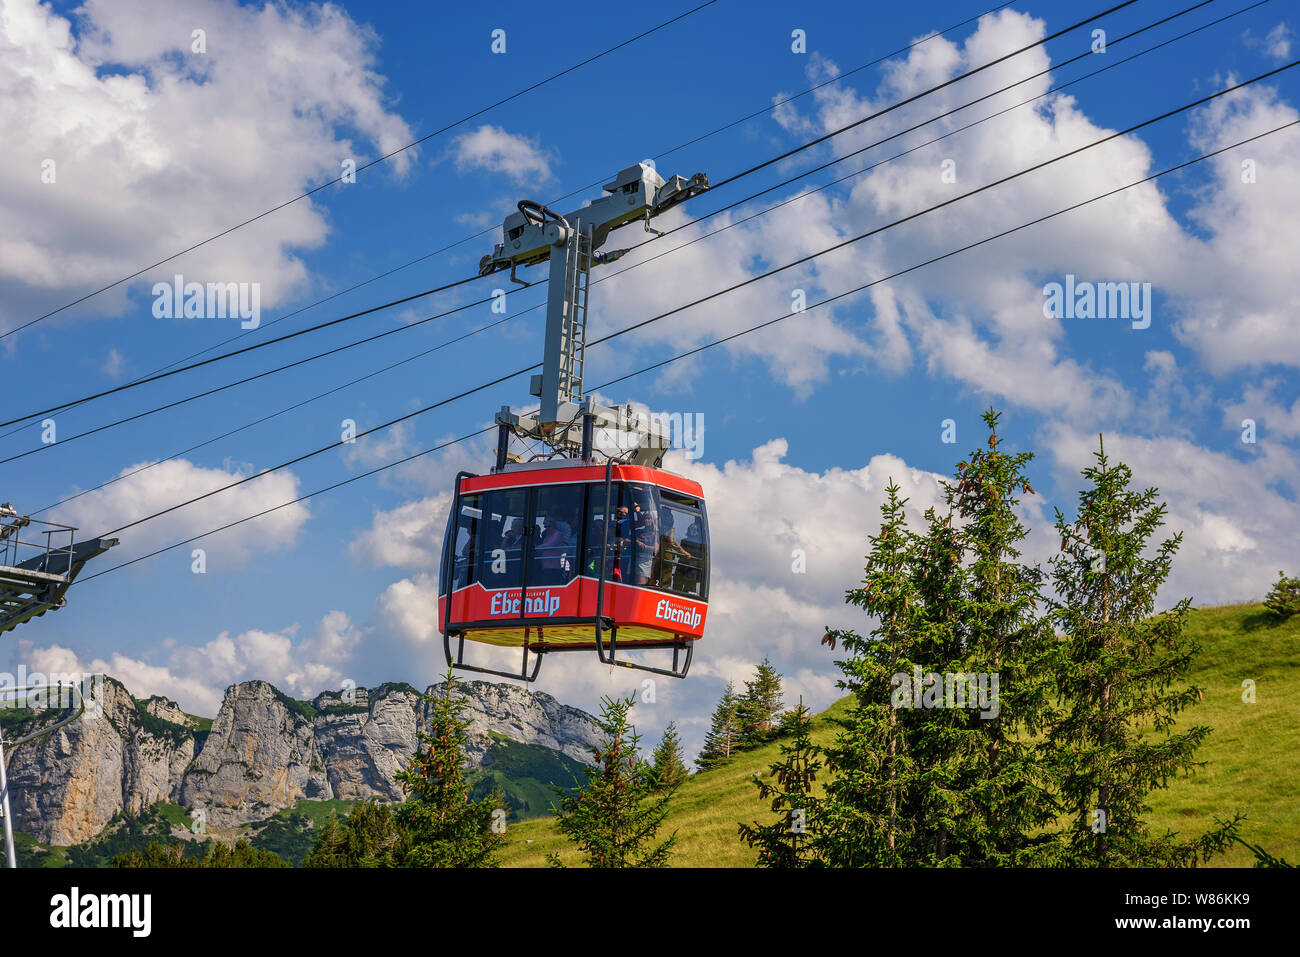 Wasserauen - Ebenalp cable railway car in the Swiss Alps in Switzerland Stock Photo